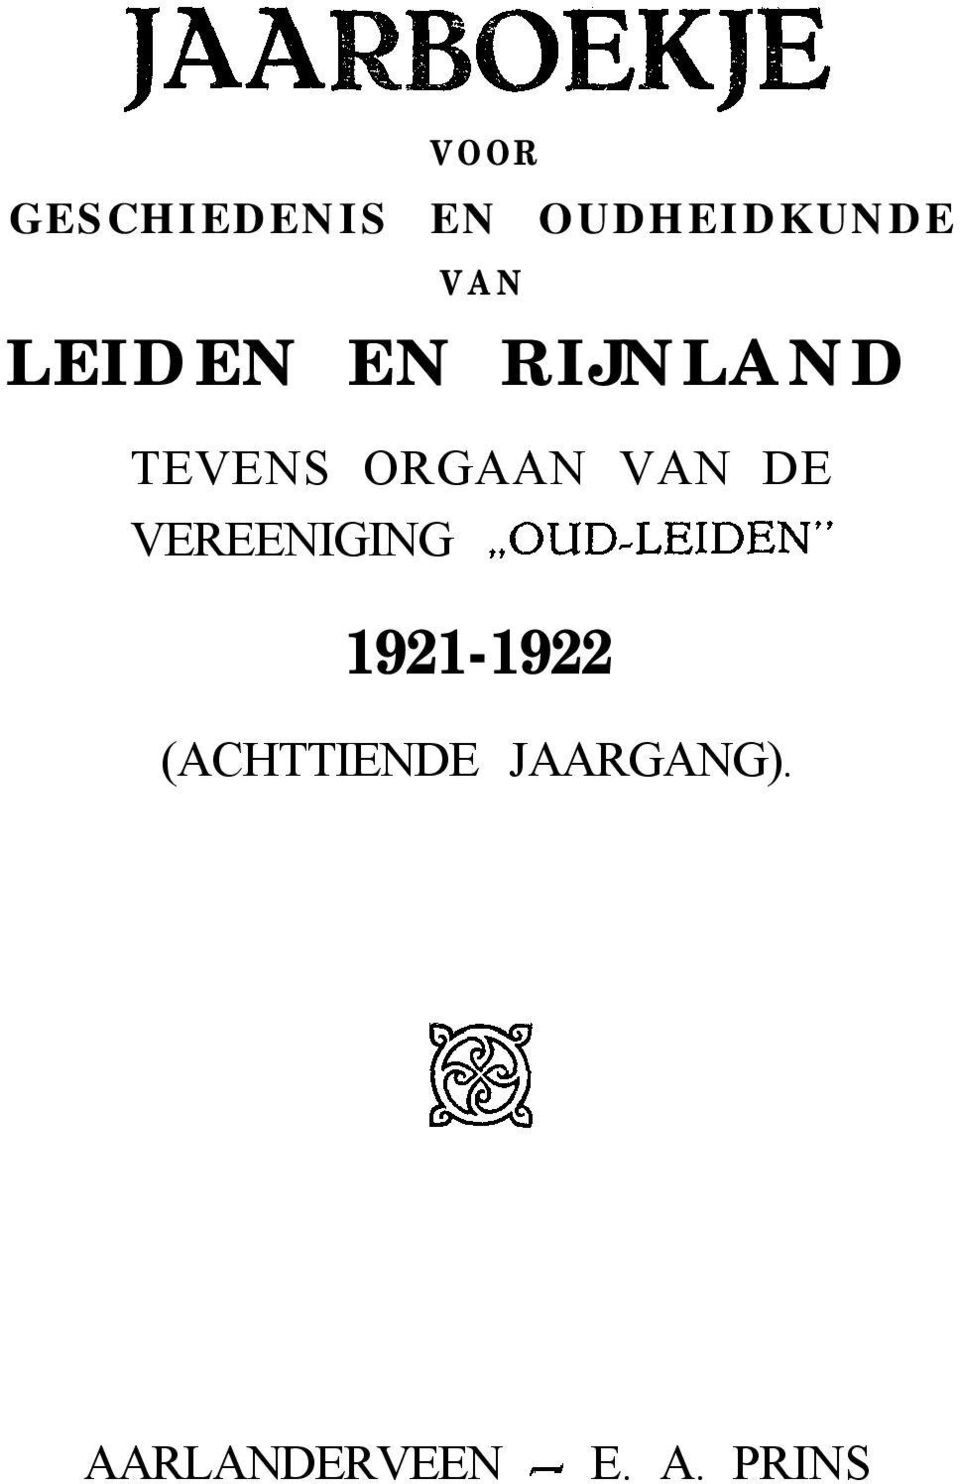 VEREENIGING,,OUD-LEIDEN 1921-1922